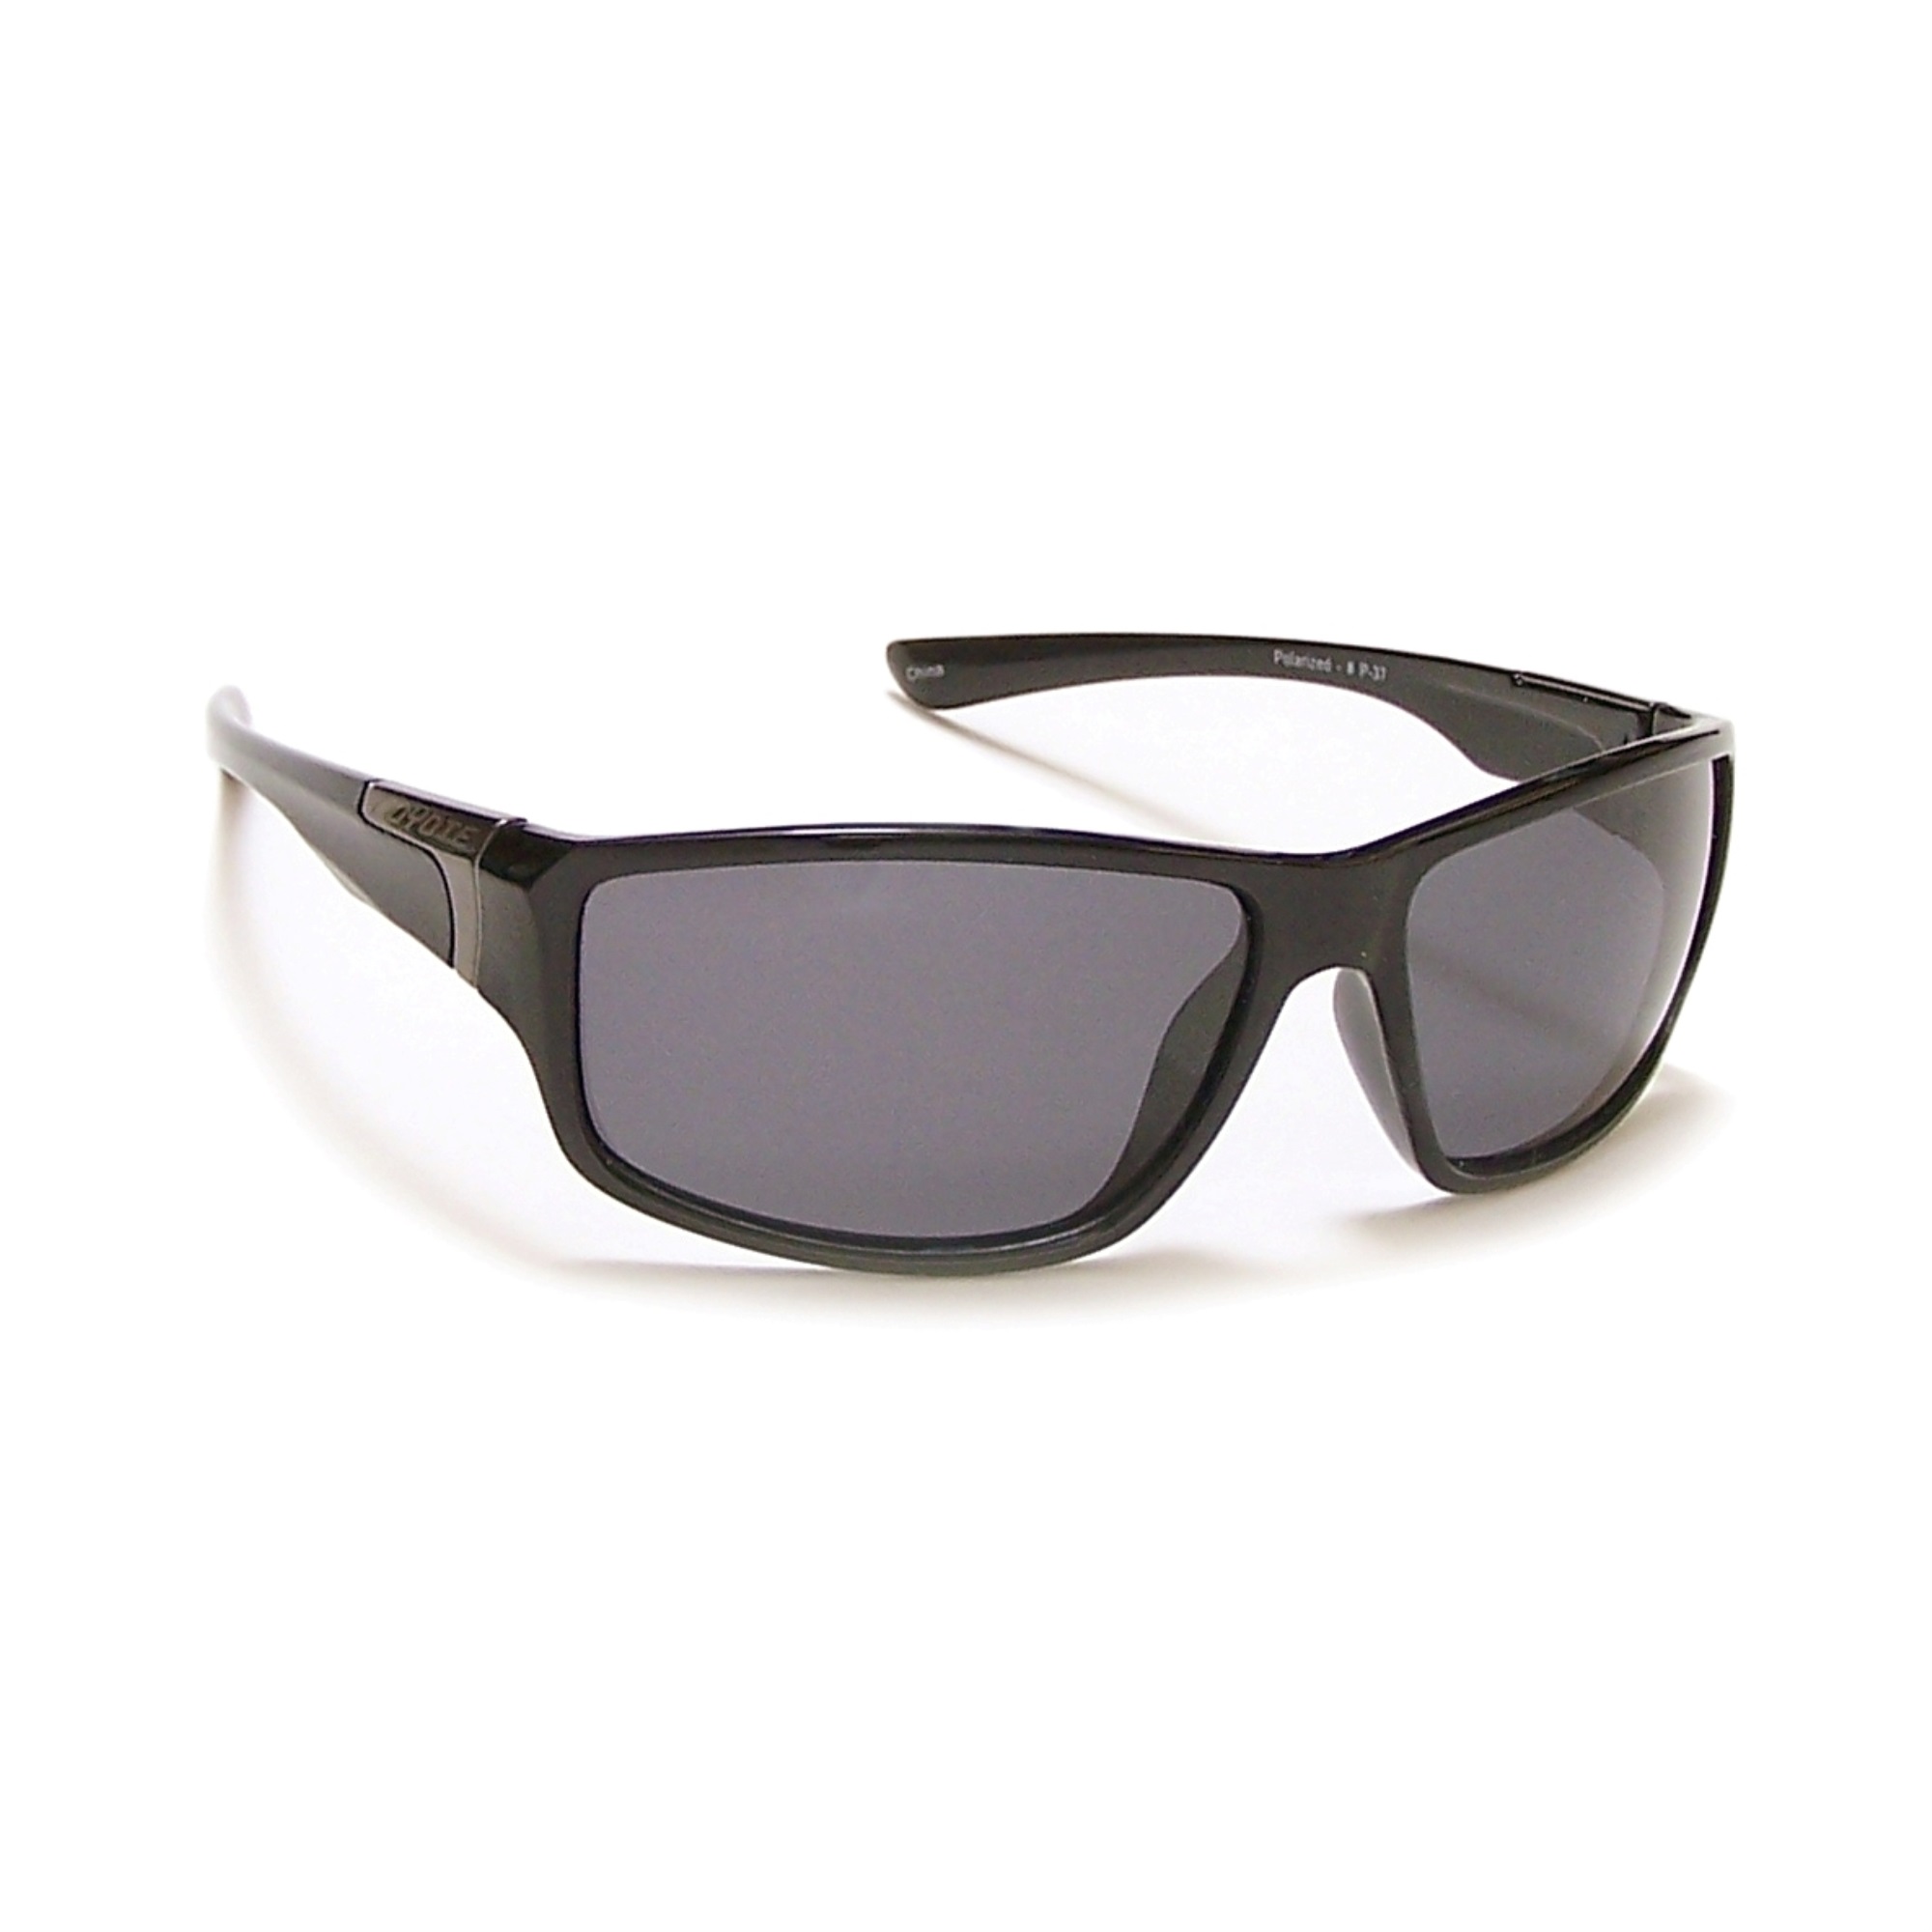 Coyote Eyewear P-37 black-gray Sportsmen Series Polarized Sunglasses - image 2 of 2